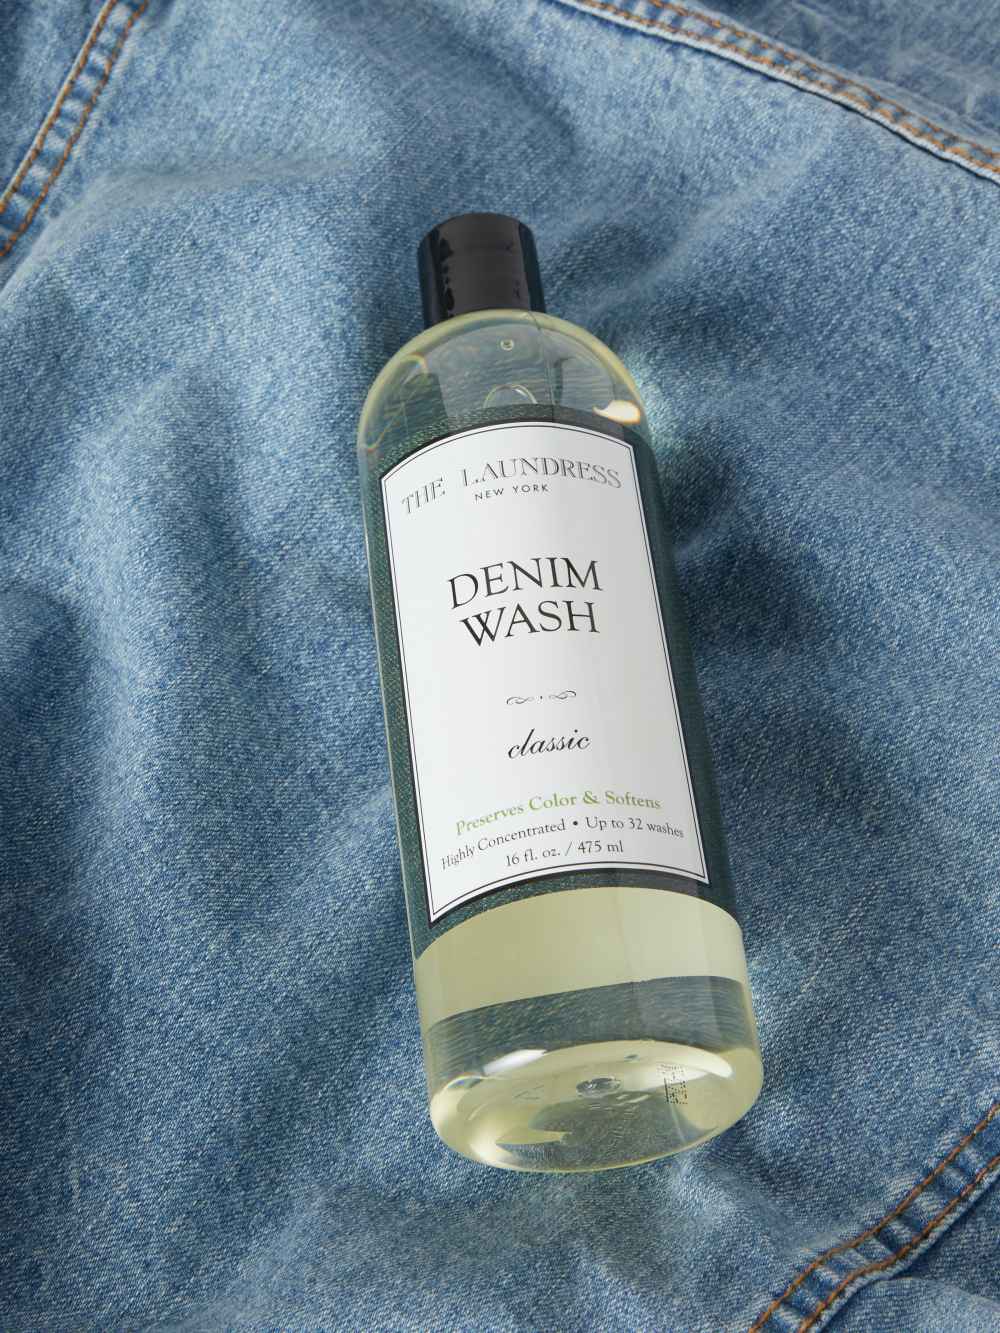 The Laundress Classic Denim Wash